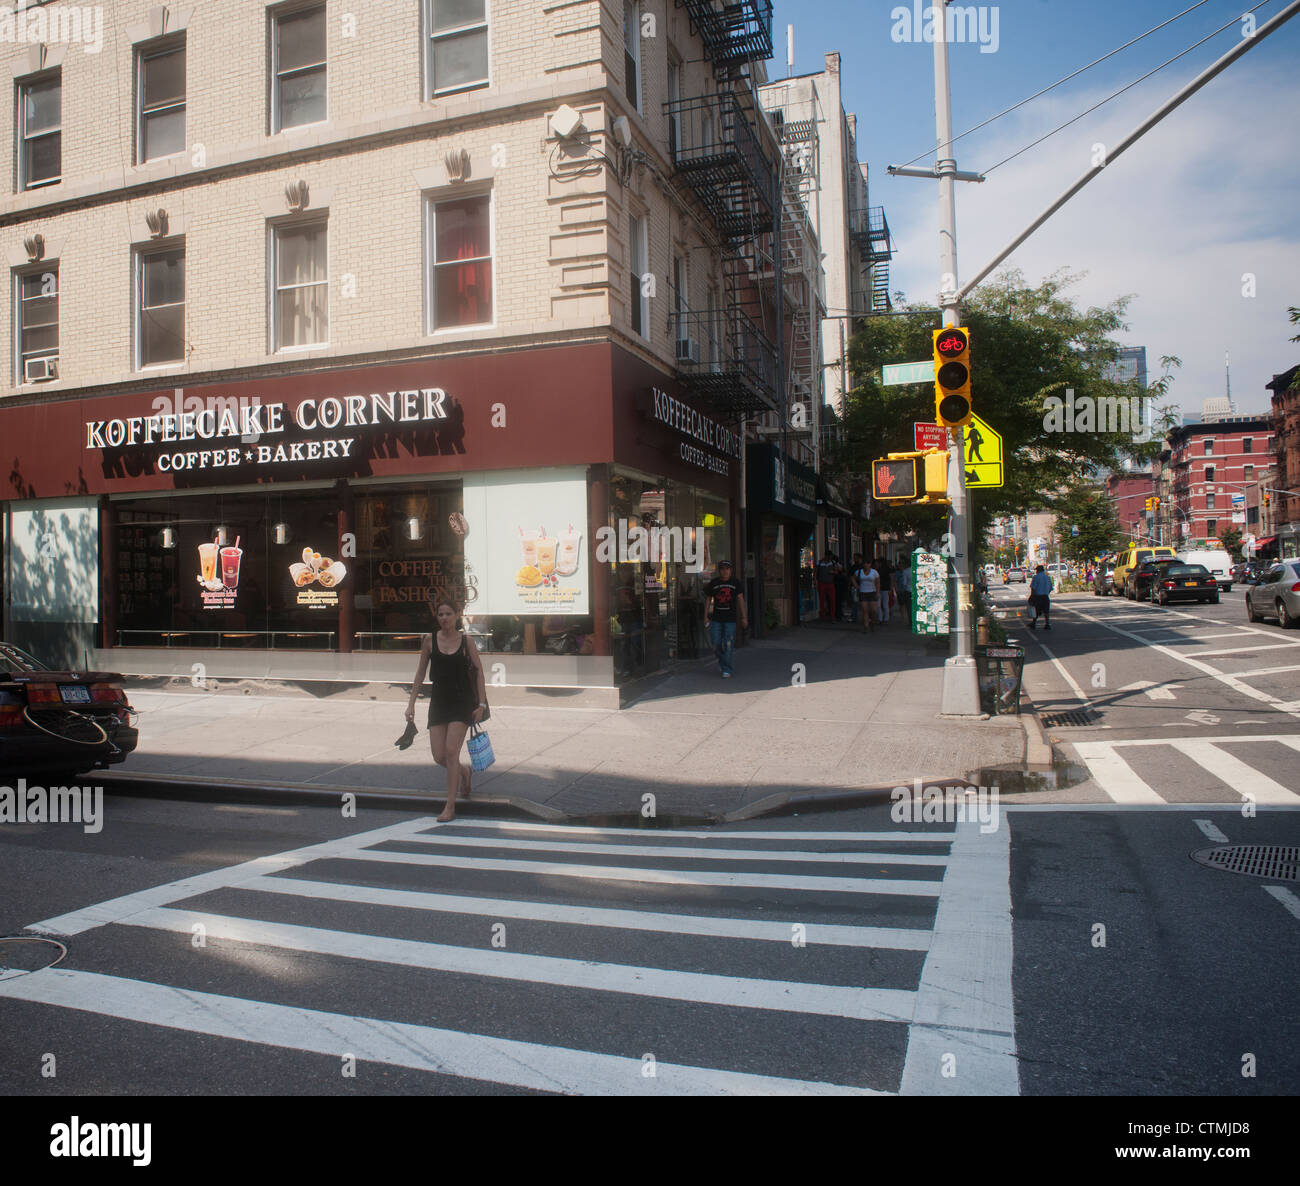 The Koffeecake Corner coffee shop and bakery cafe in the New York neighborhood of Chelsea Stock Photo